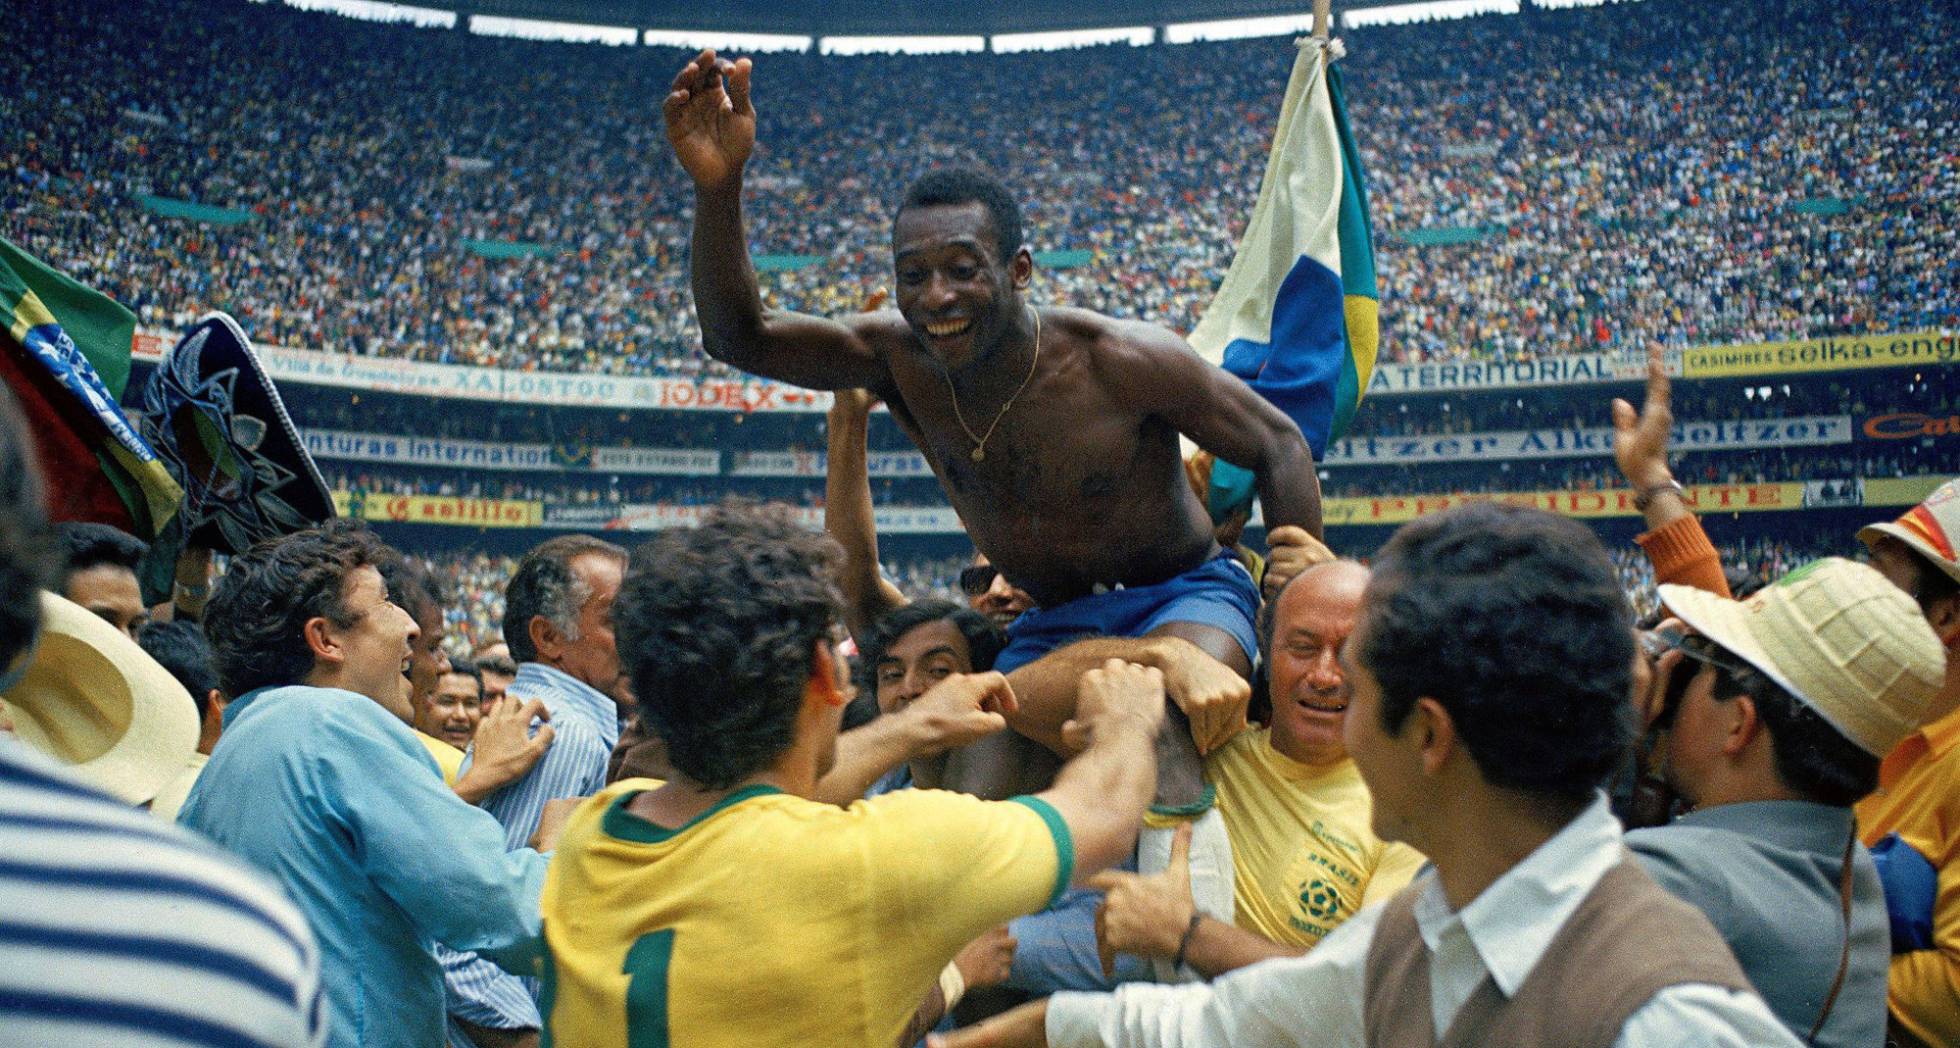 Pele, the king of football